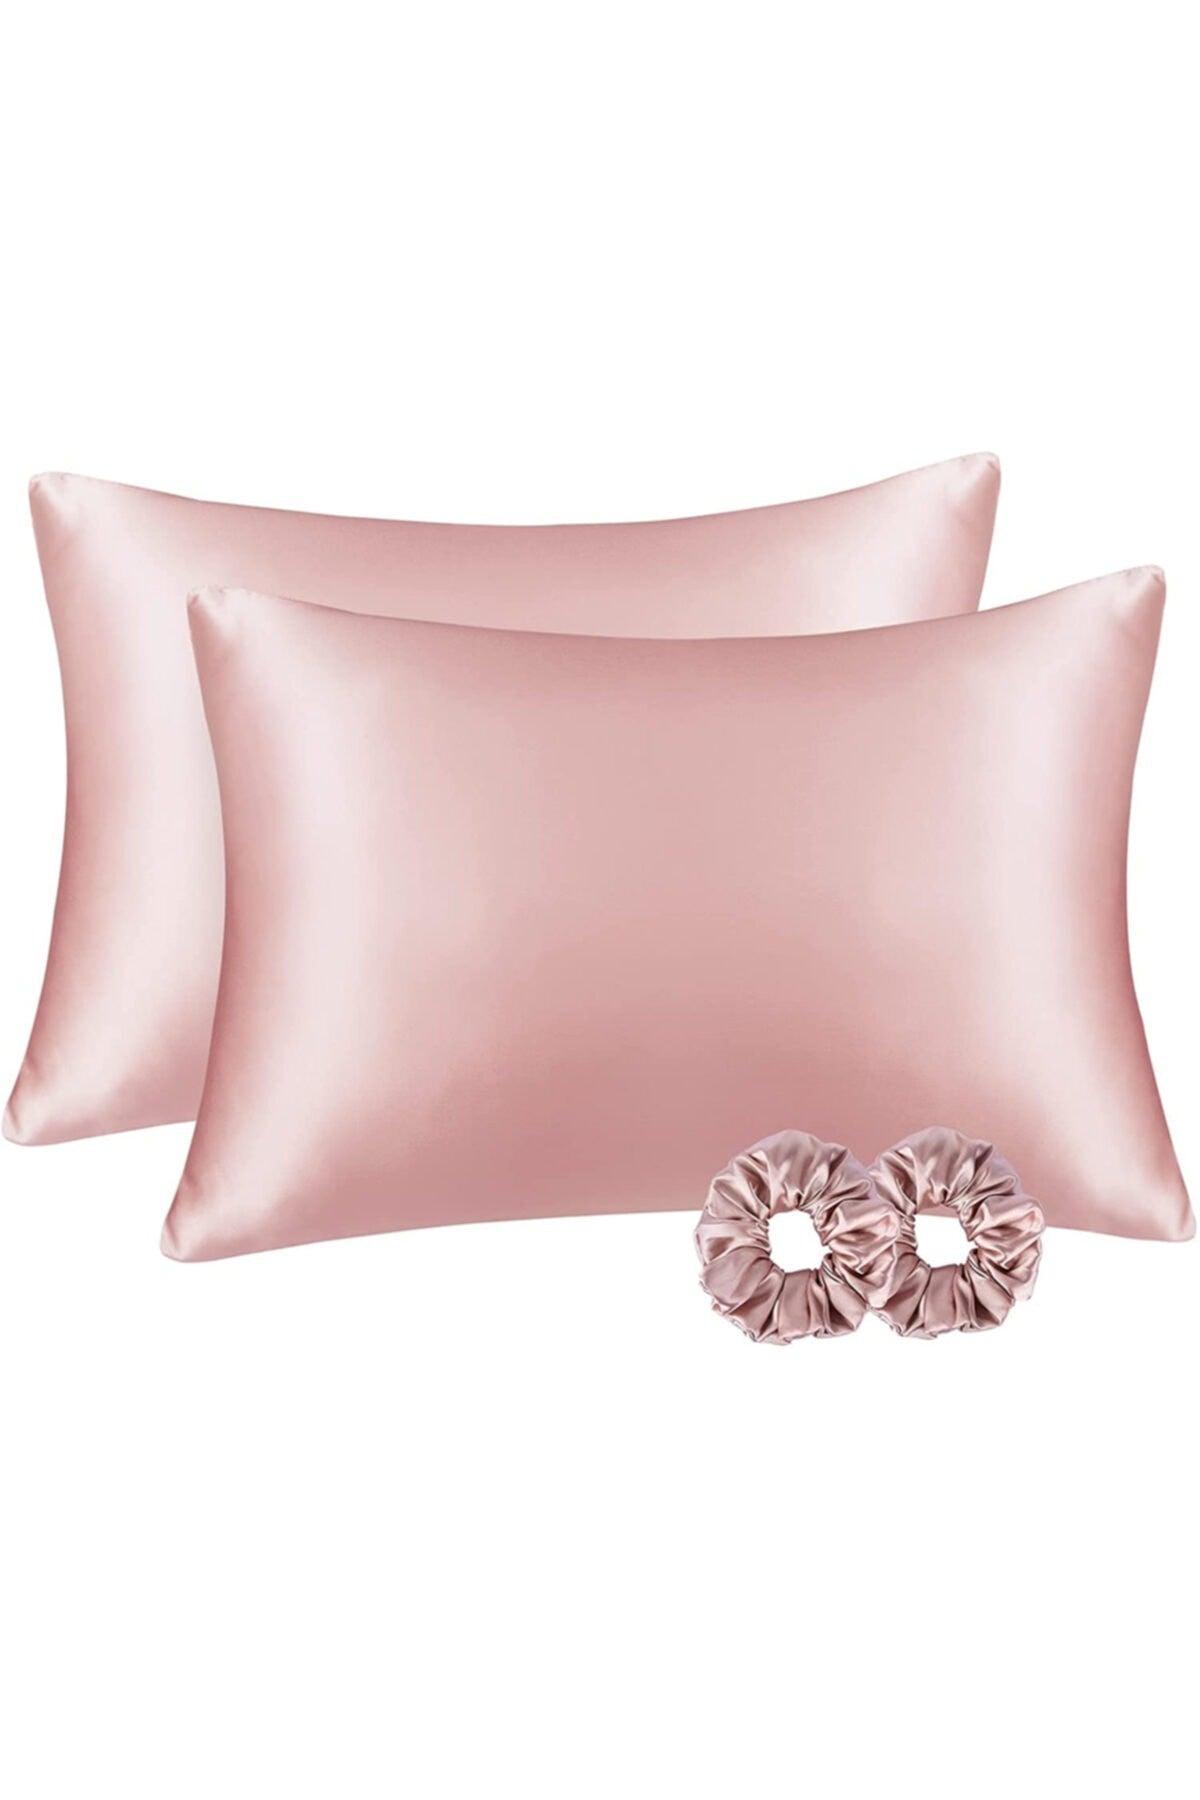 100% Silk Satin 50x70 Cm 2 Pillow Cases & 2 Buckles Pink Color - Swordslife